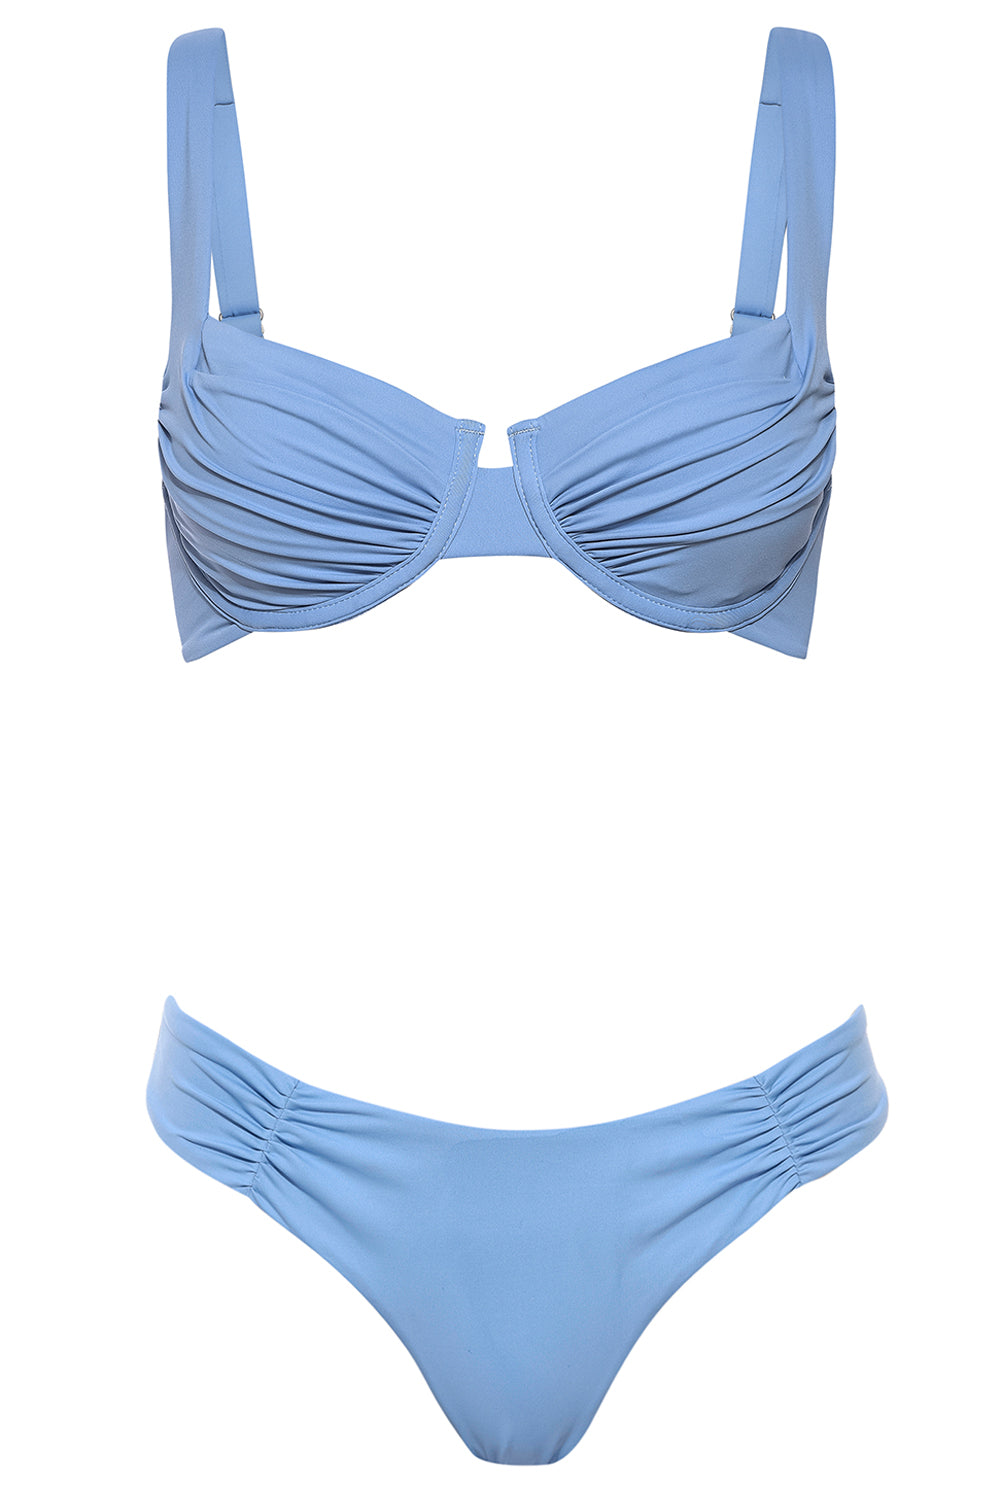 aruba-bikini-babyblue-set-regular-bottoms-laid -on-a-white-background.